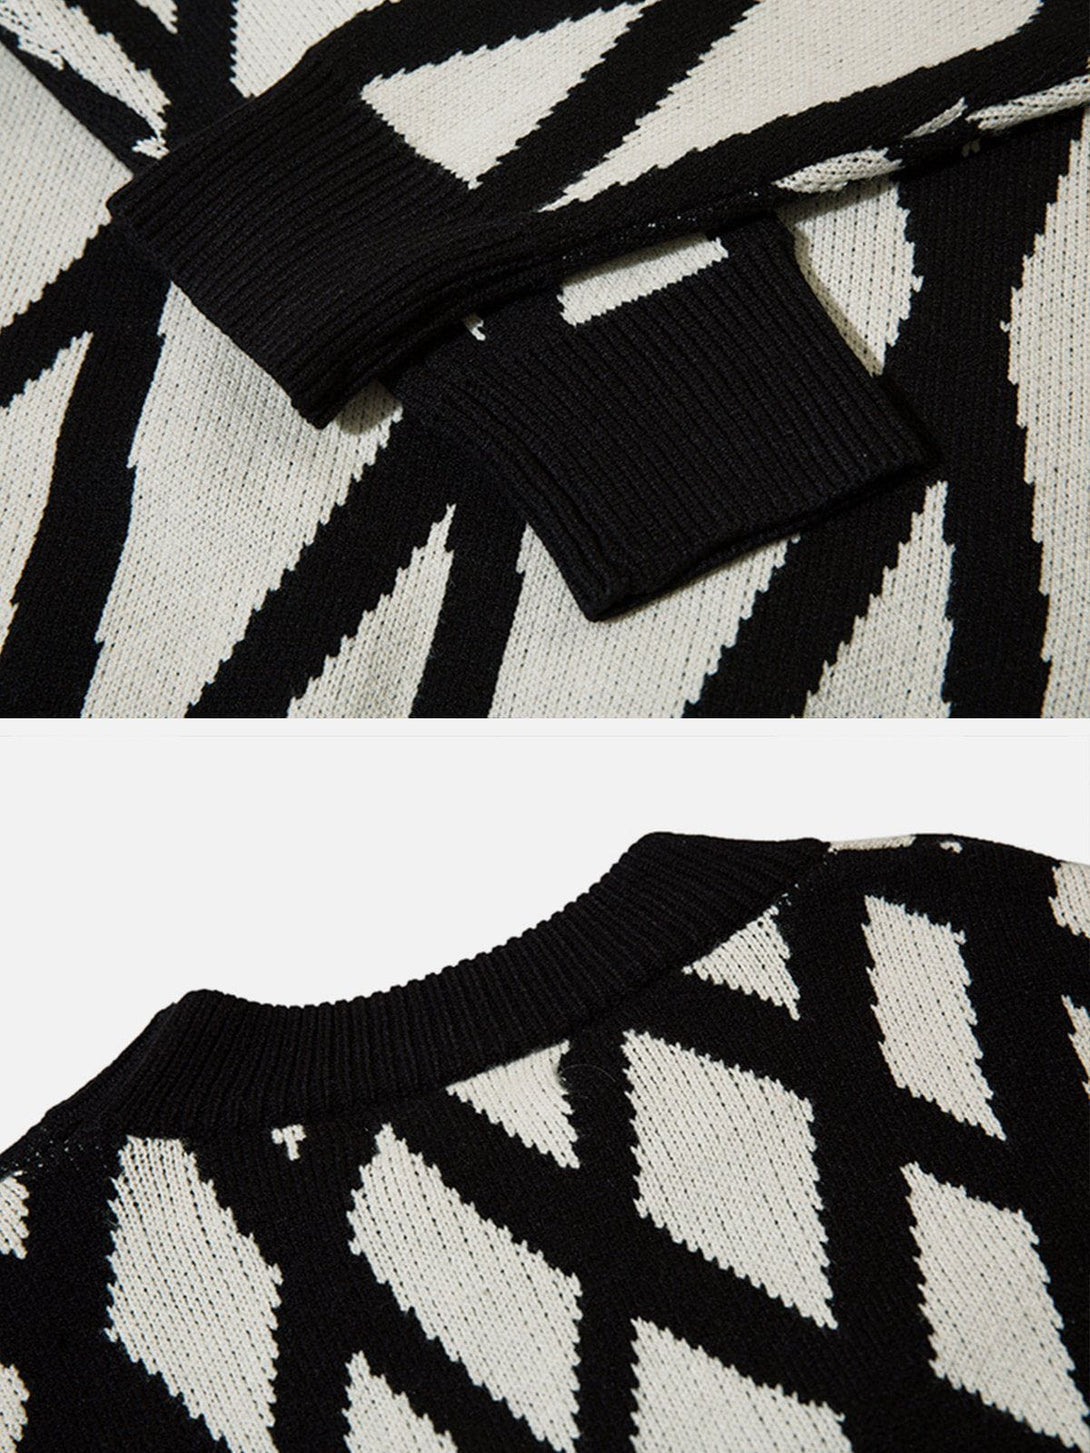 Majesda® - Crossover Mesh Jacquard Knit Sweater outfit ideas streetwear fashion